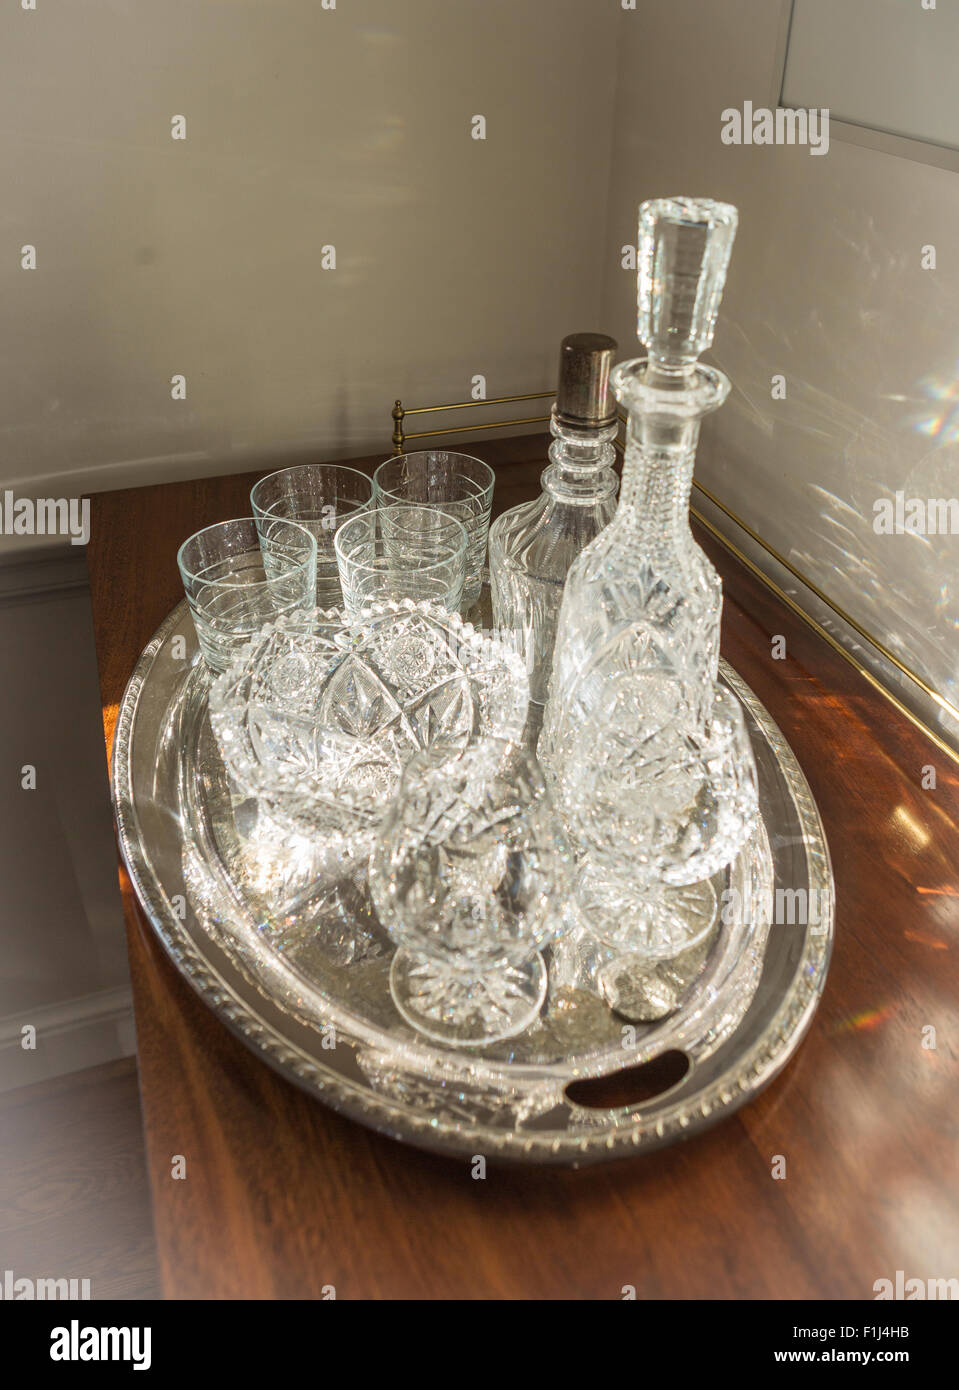 VIRGINIA, USA - Crystal glass on silver platter. Stock Photo